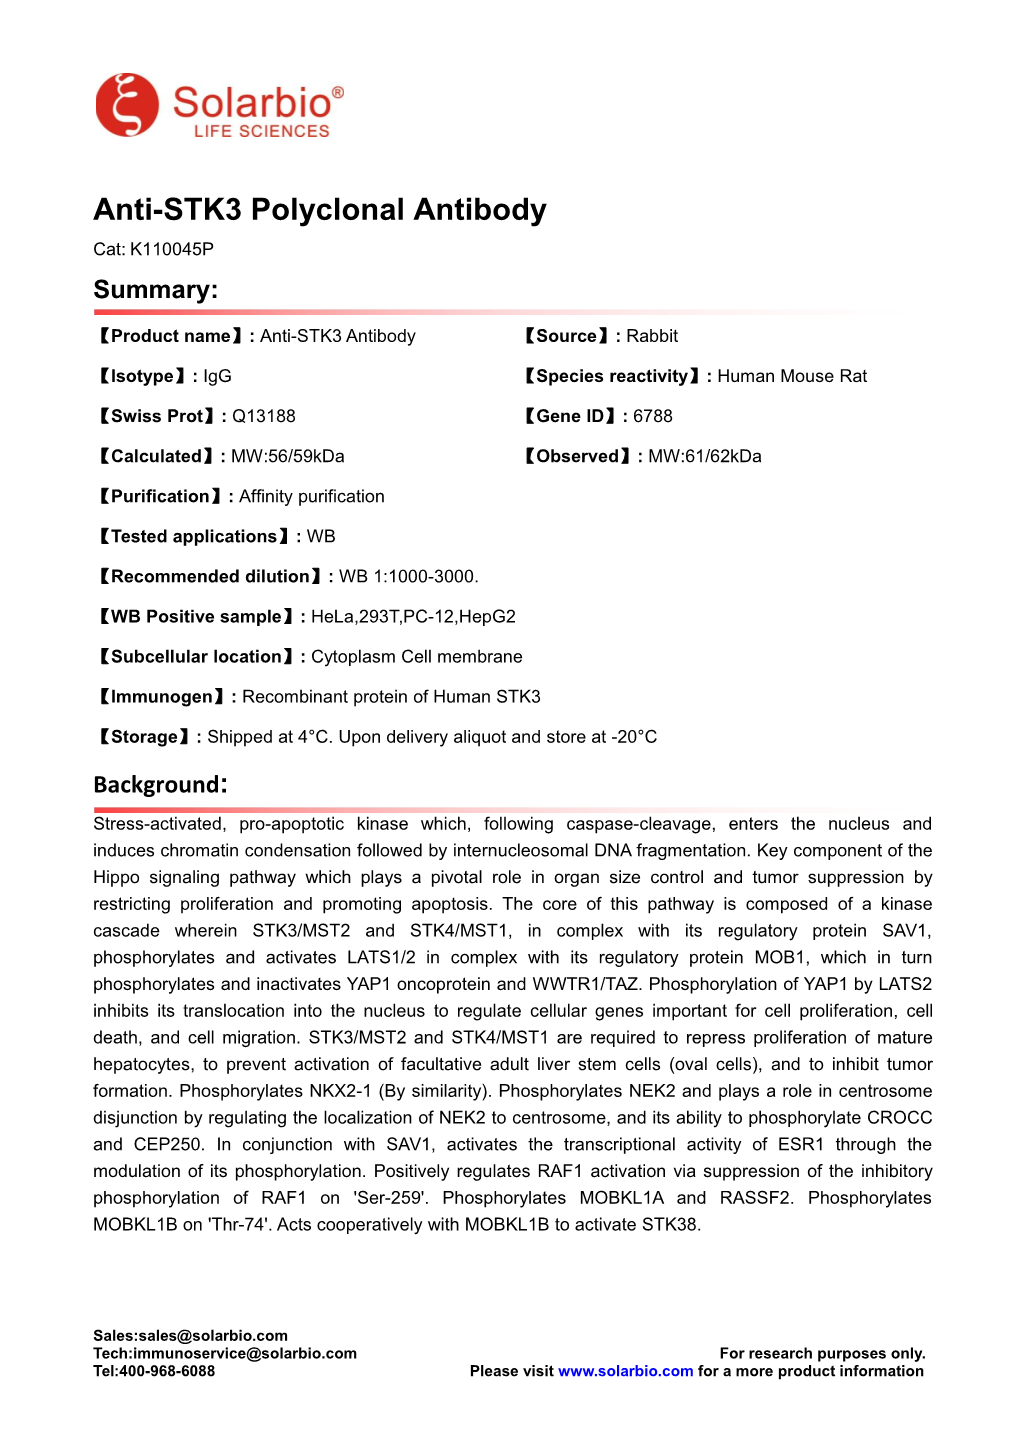 Anti-STK3 Polyclonal Antibody Cat: K110045P Summary